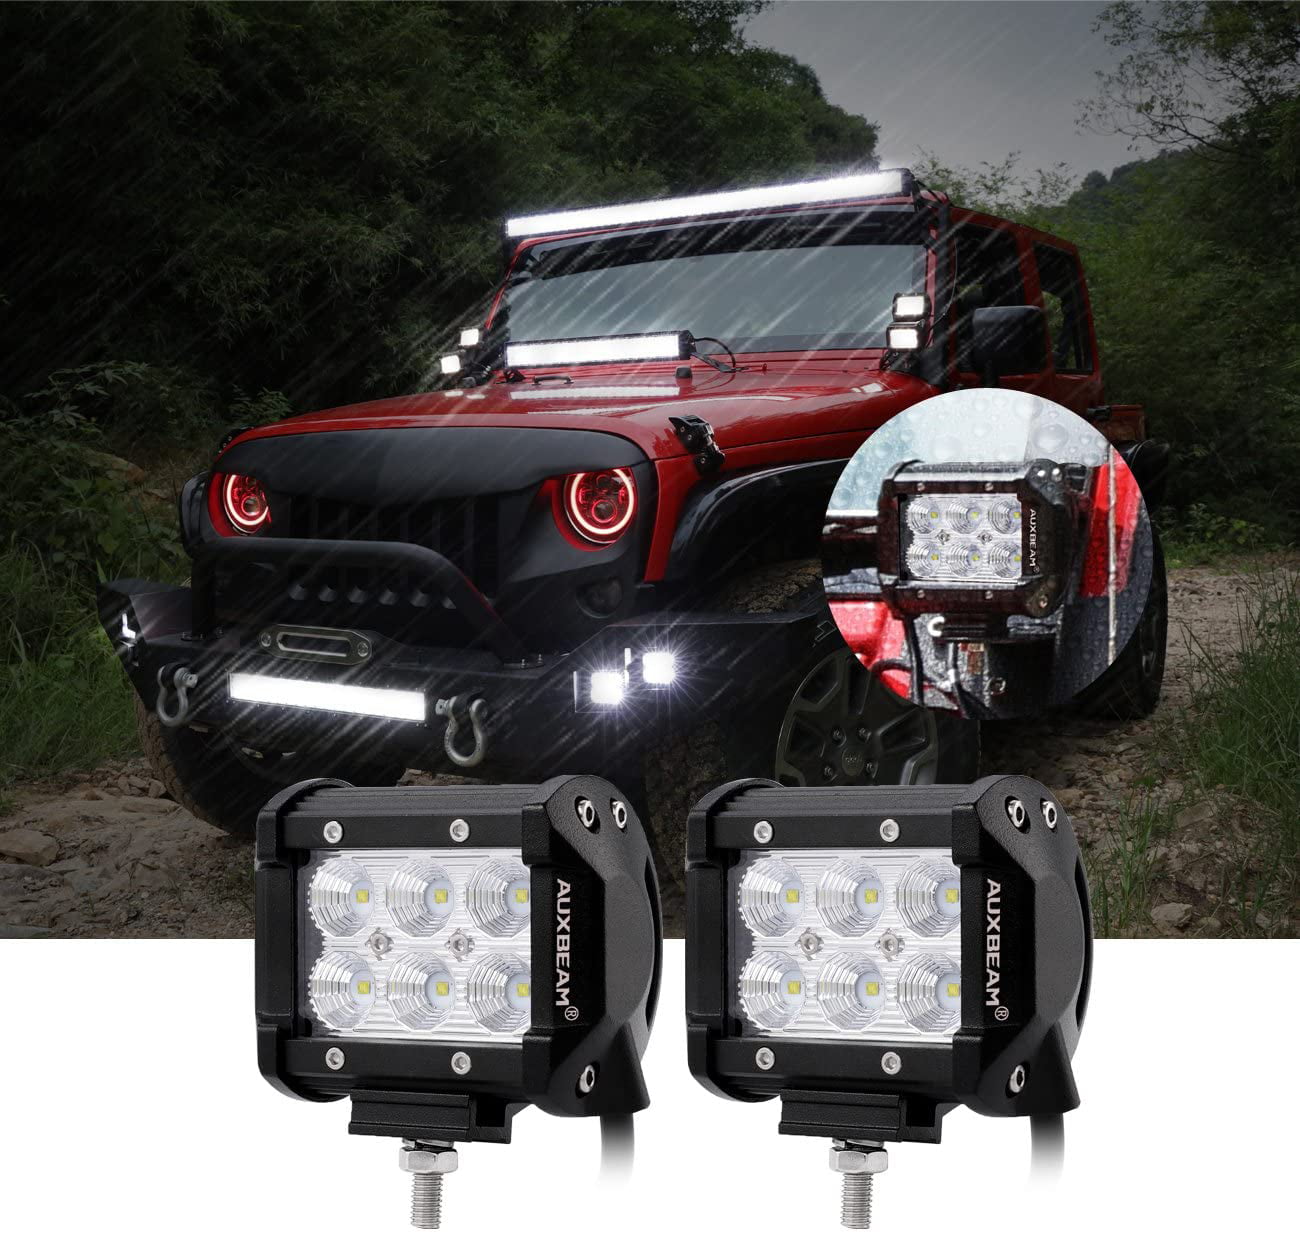 Auxbeam 4 LED Pods 18W LED Light Bar Flood Beam LED Off Road Driving Lights with Wiring Harness for SUV ATV UTV Trucks Pickup Jeep Lamp Pack of 2